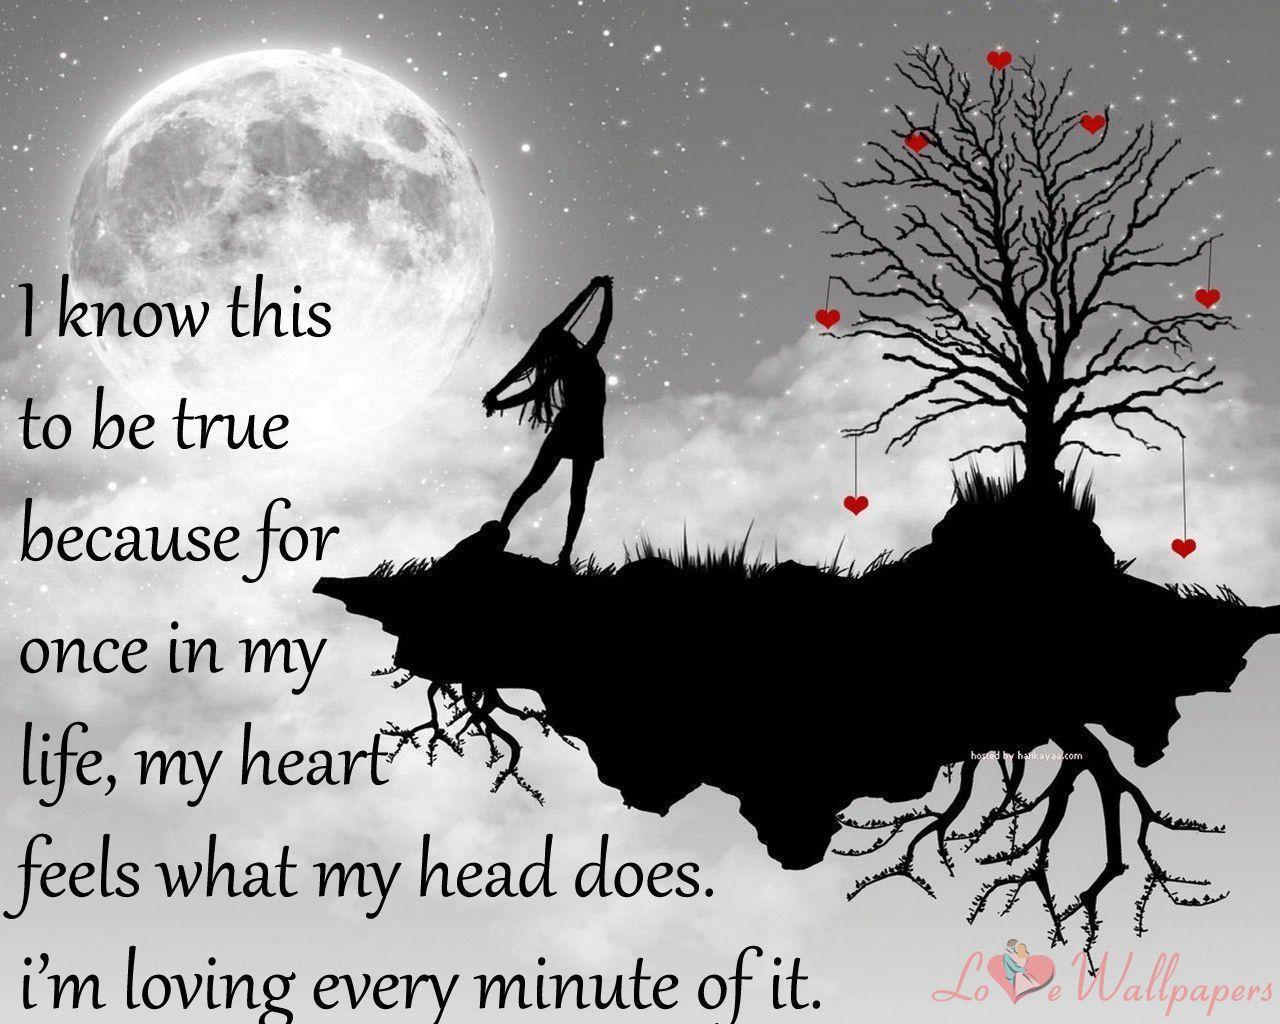 Valentines For > True Love Wallpaper For Facebook